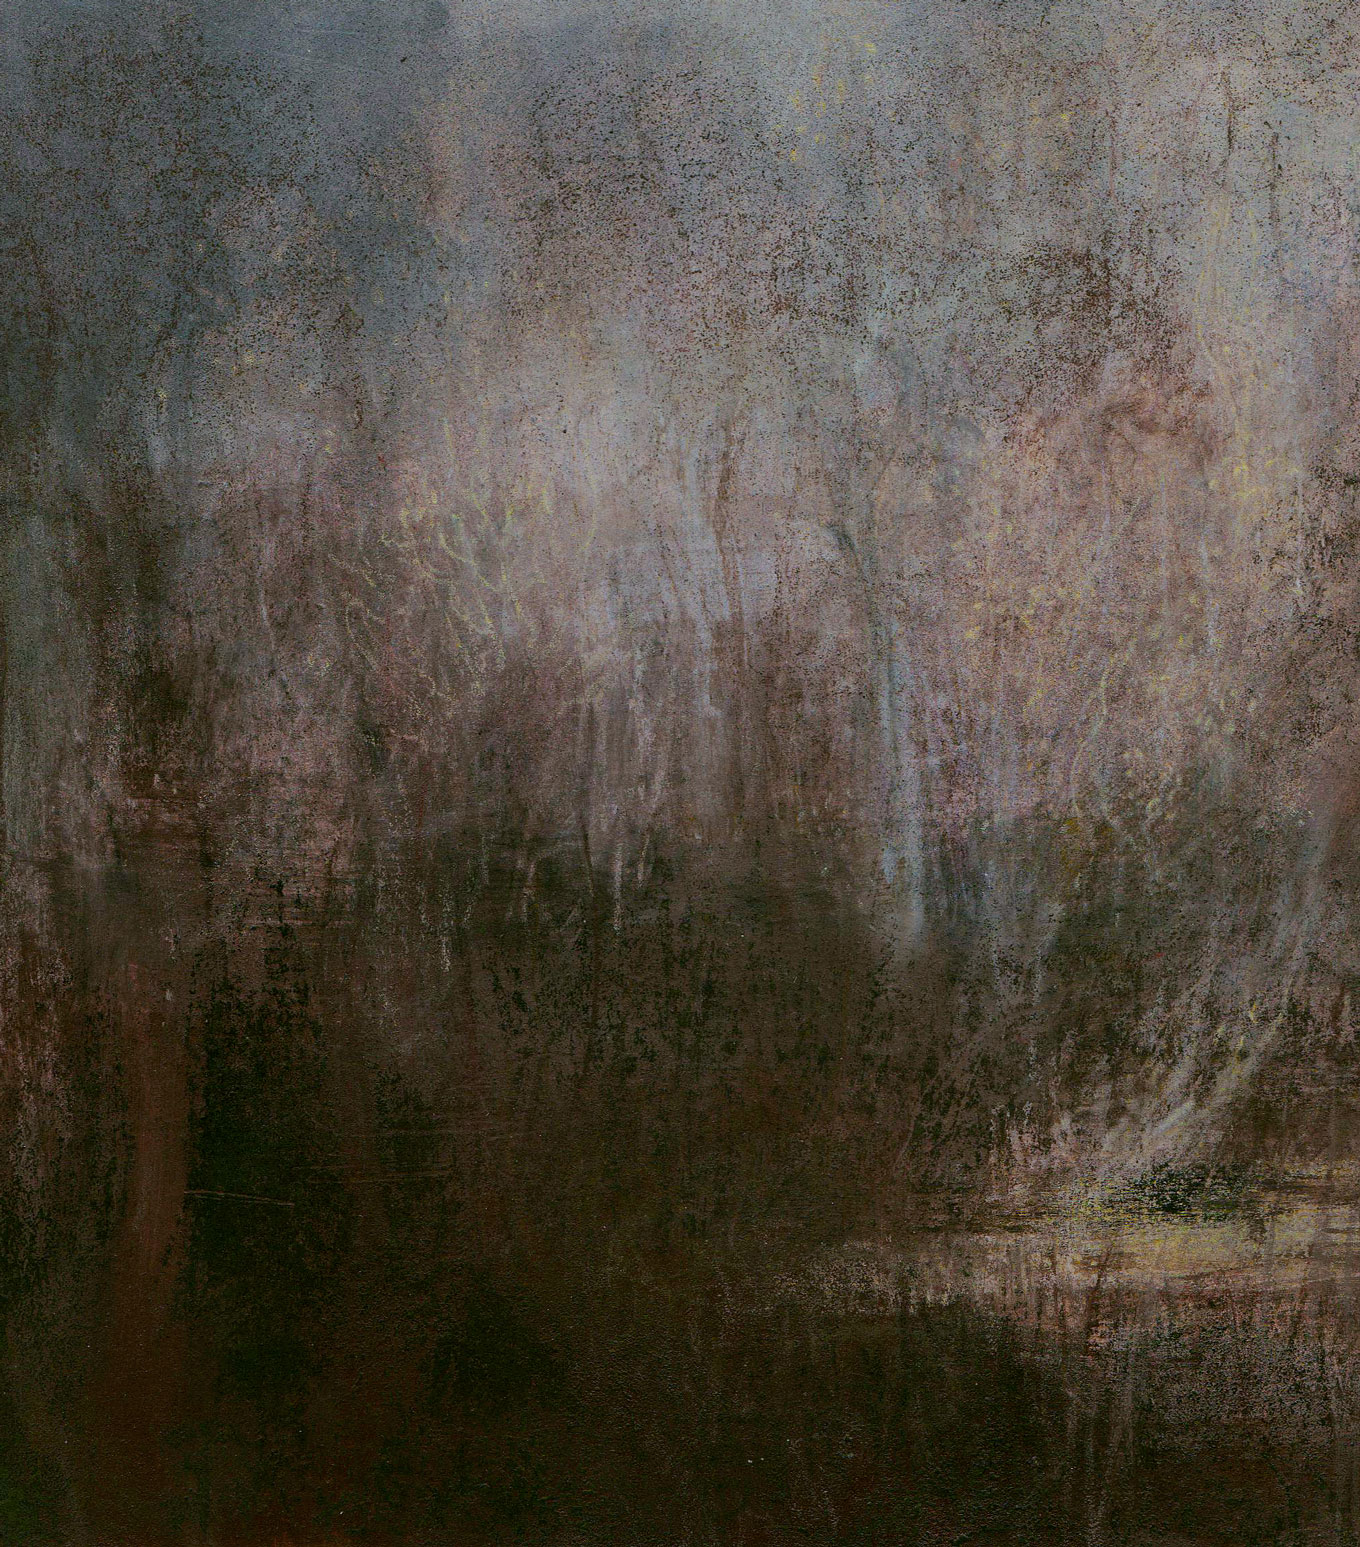 L1261 - Nicholas Herbert, British Artist, mixed media landscape painting of Mermaid Pond Greensand Ridge, 2021